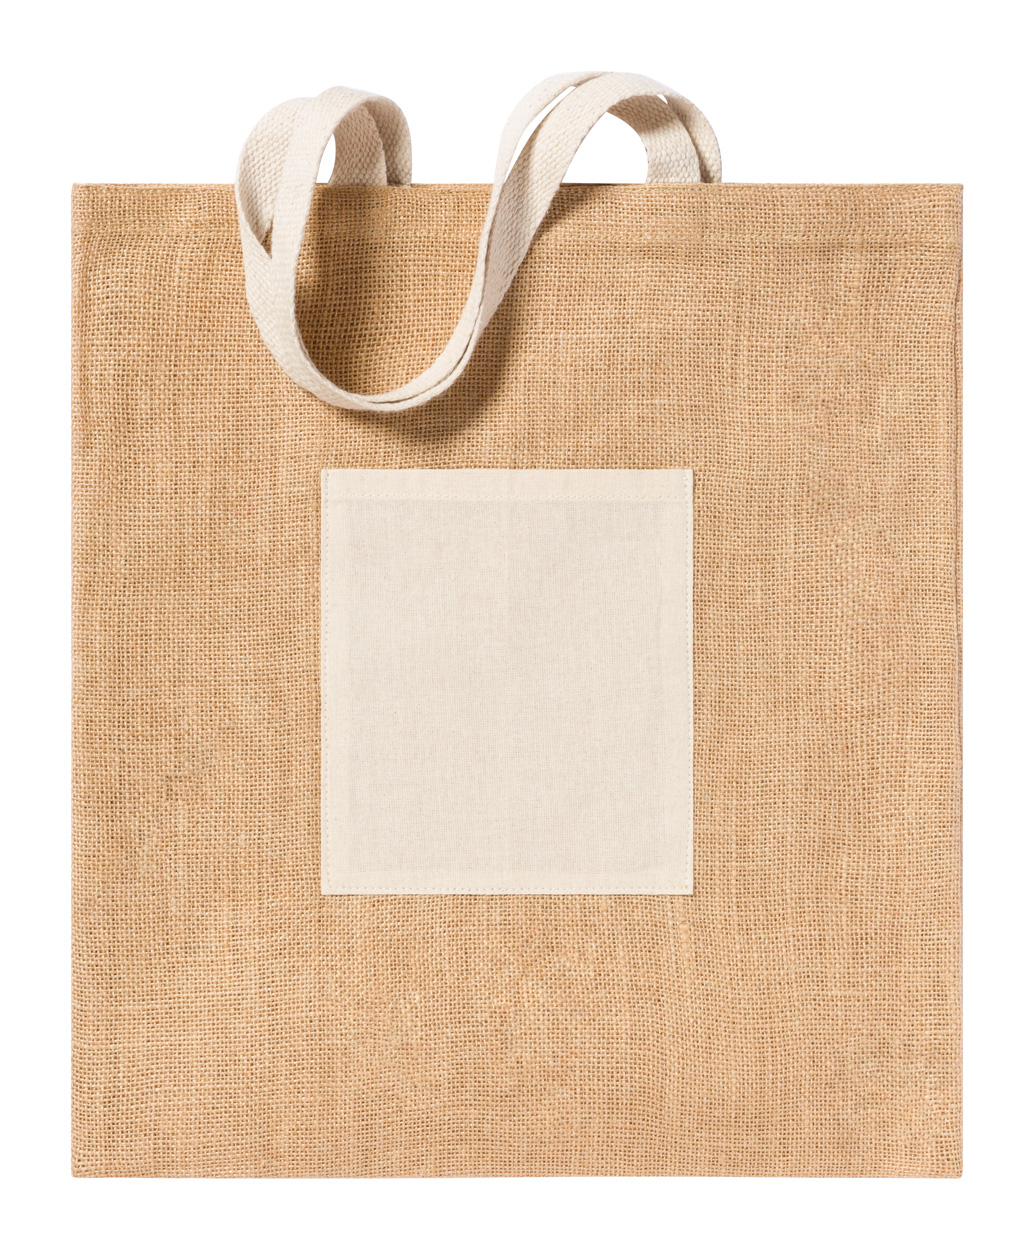 Jute shopping bag FLOBUX - natural